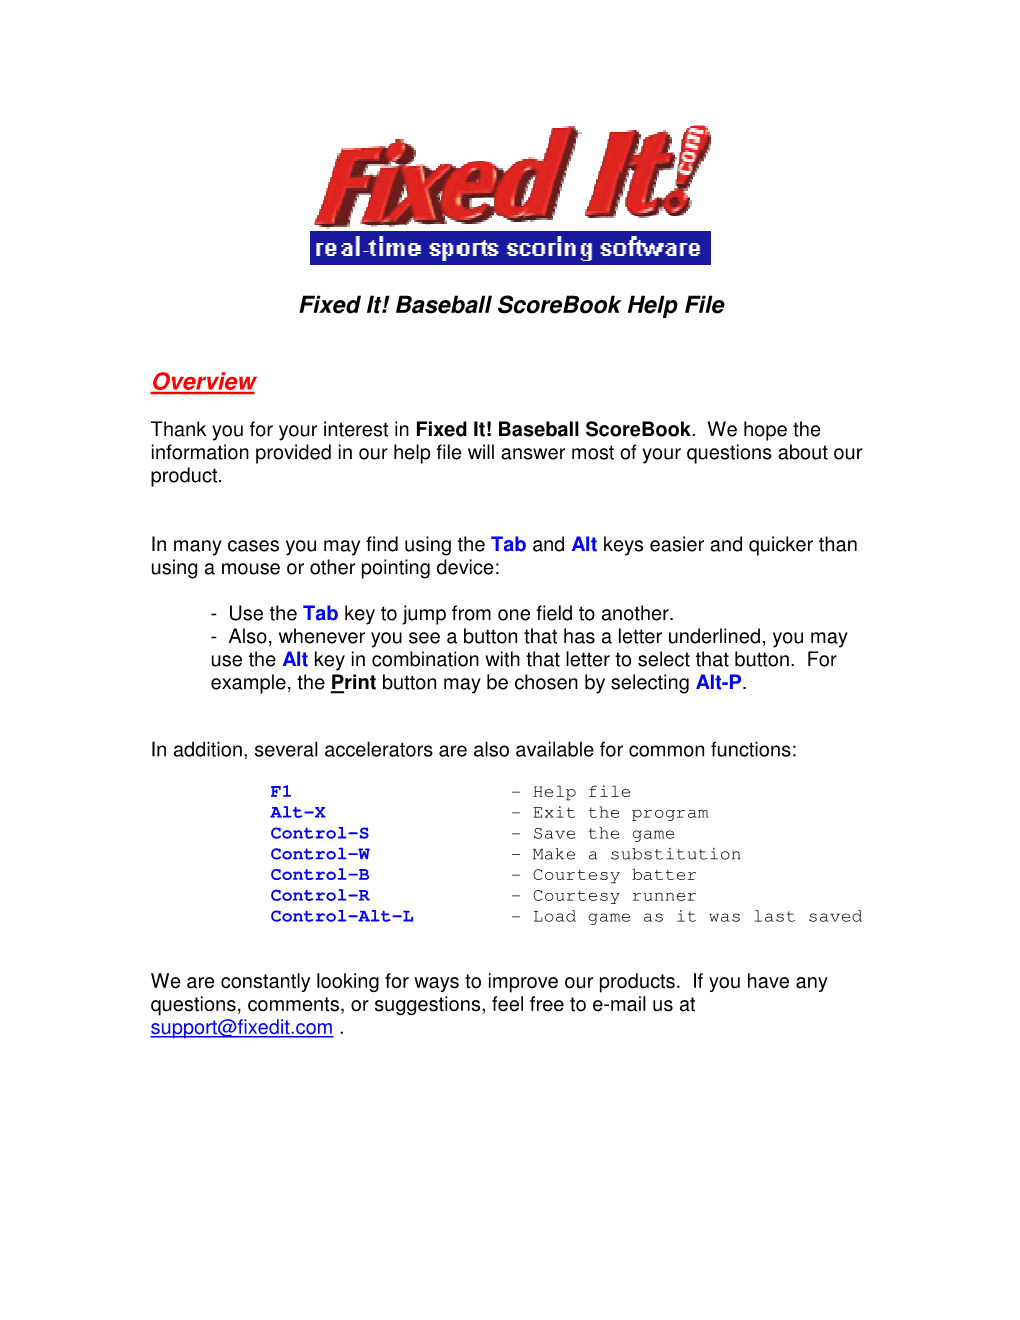 Fixed It! Baseball Scorebook Help File Overview